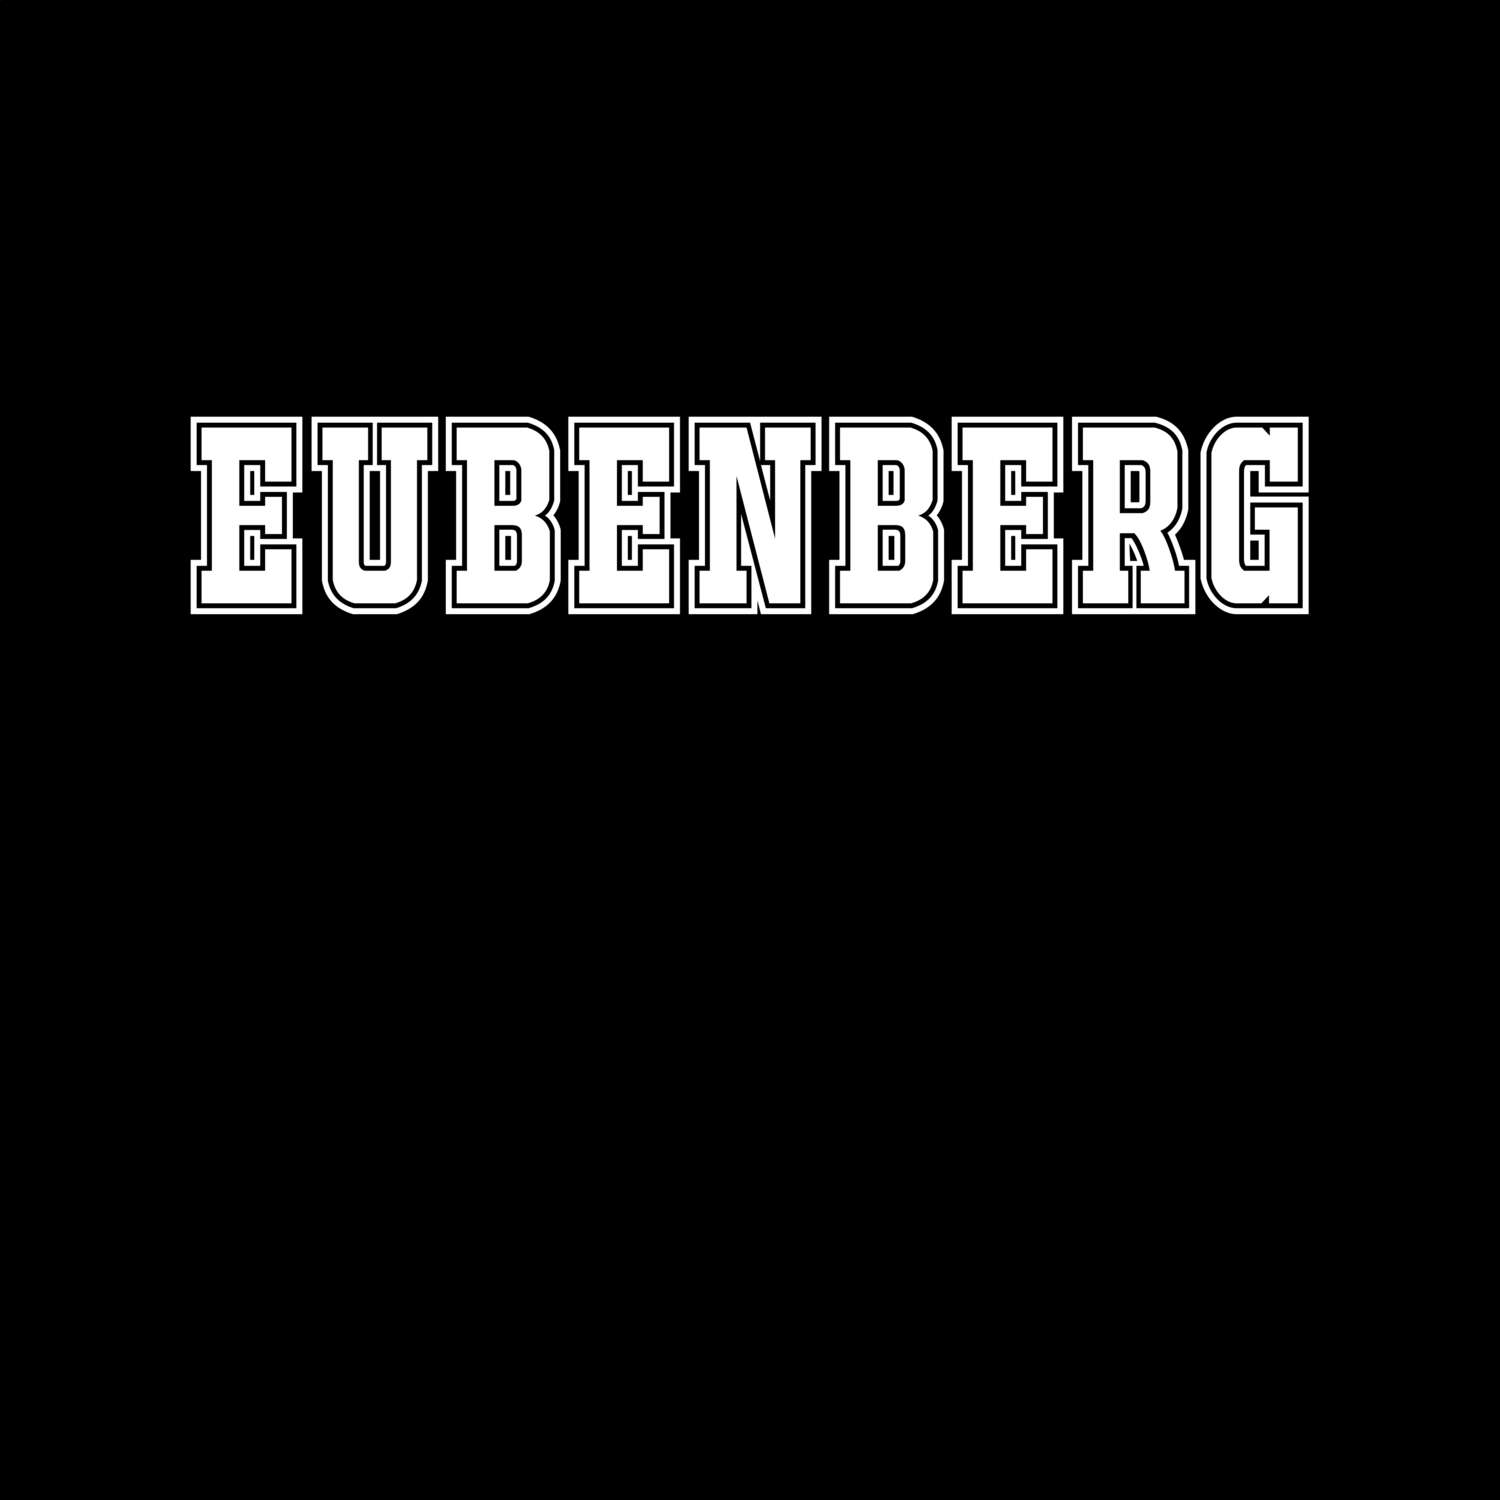 Eubenberg T-Shirt »Classic«